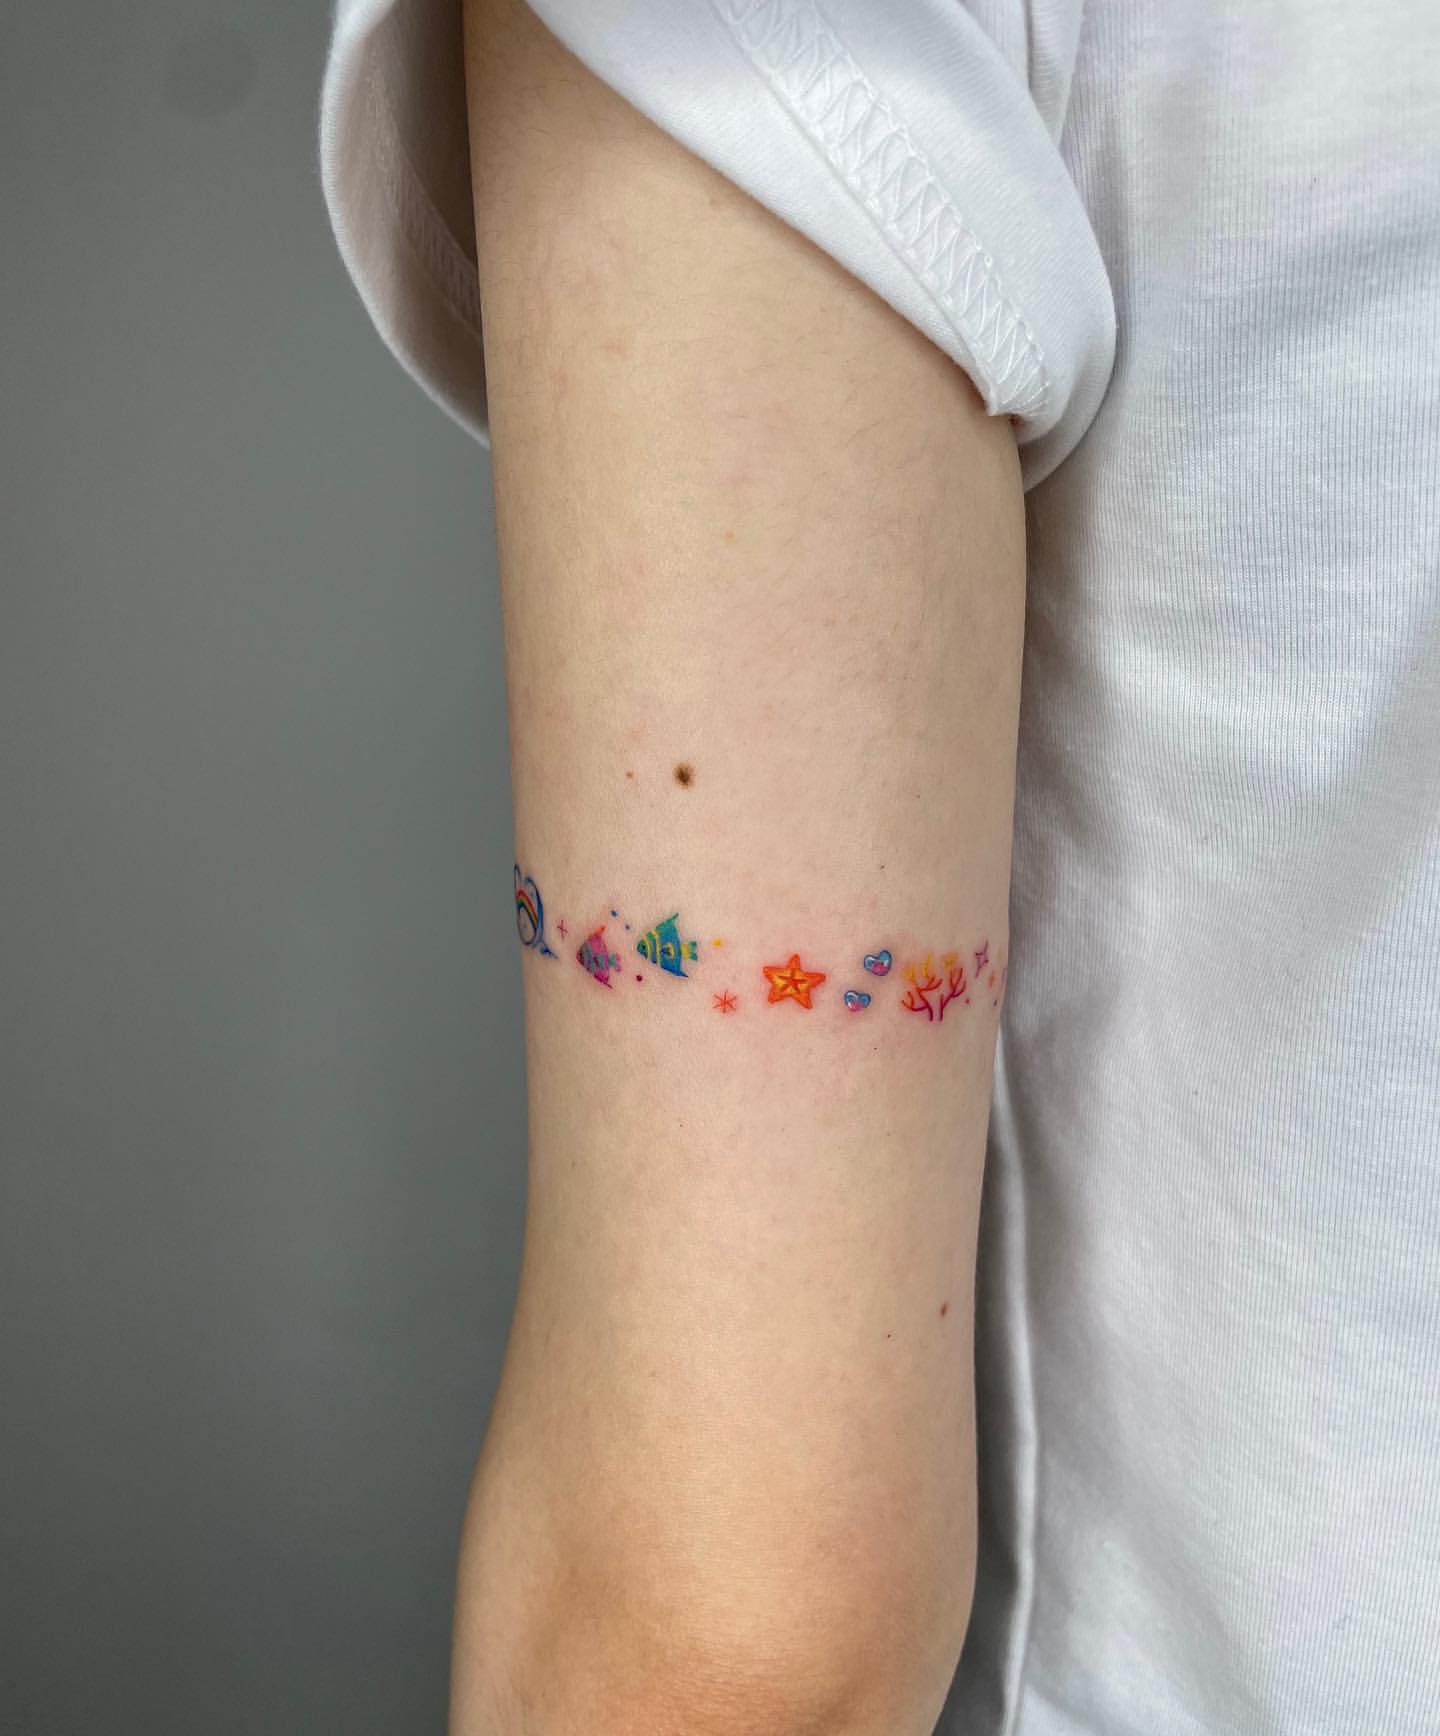 Armband Tattoo Ideas 21